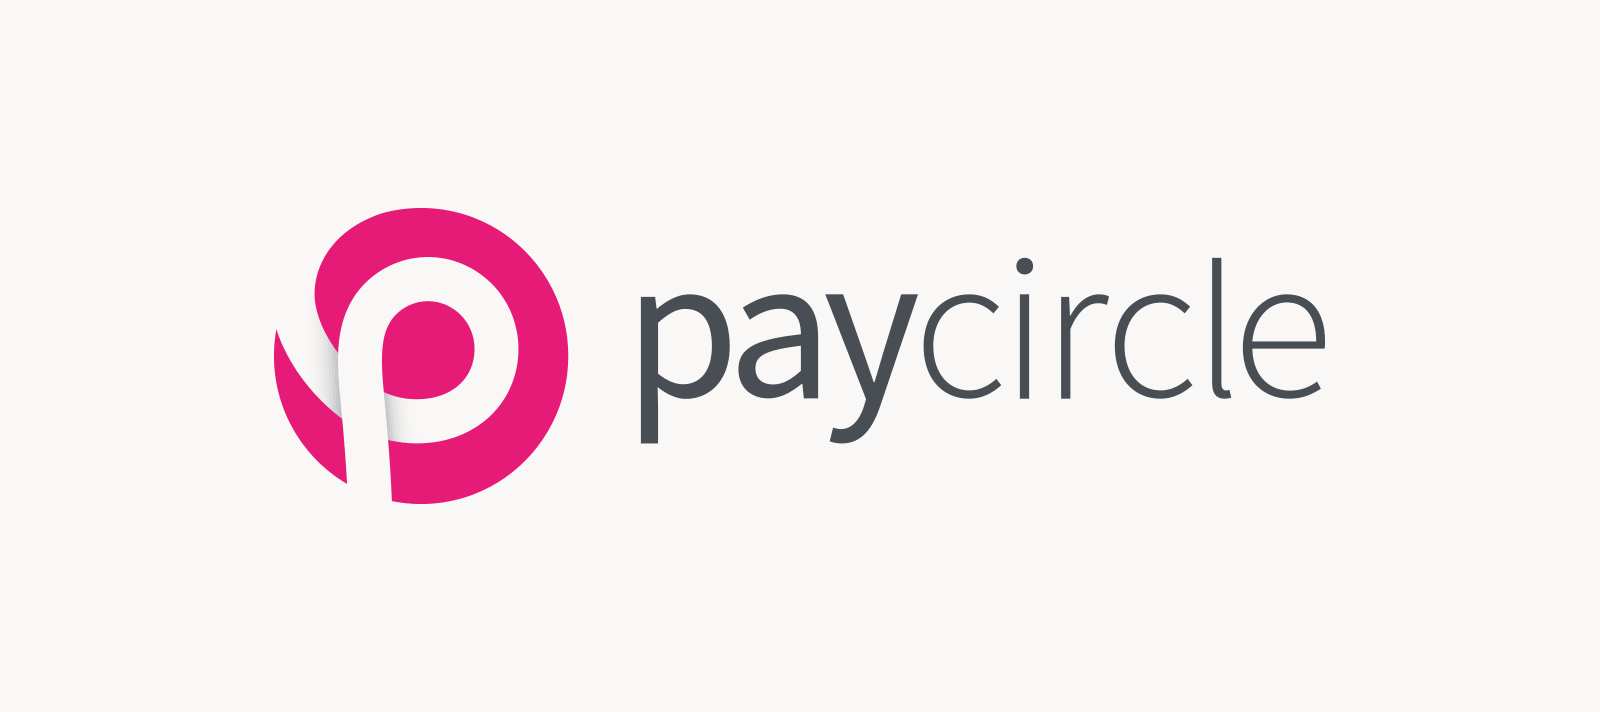 Paycircle Logo